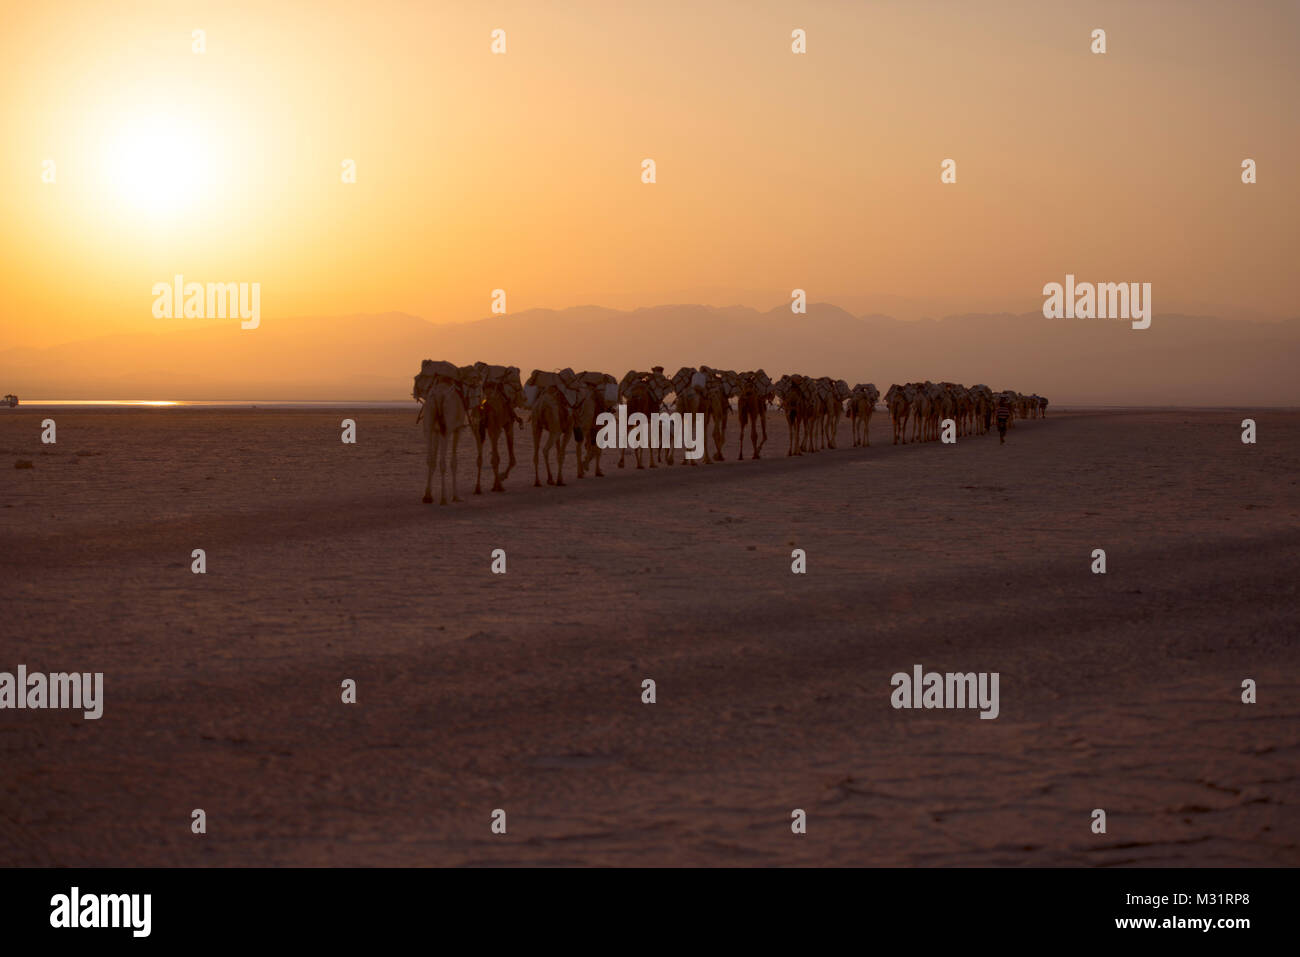 An Afar camel caravan treks through the sunset in the Danakil Desert. Stock Photo